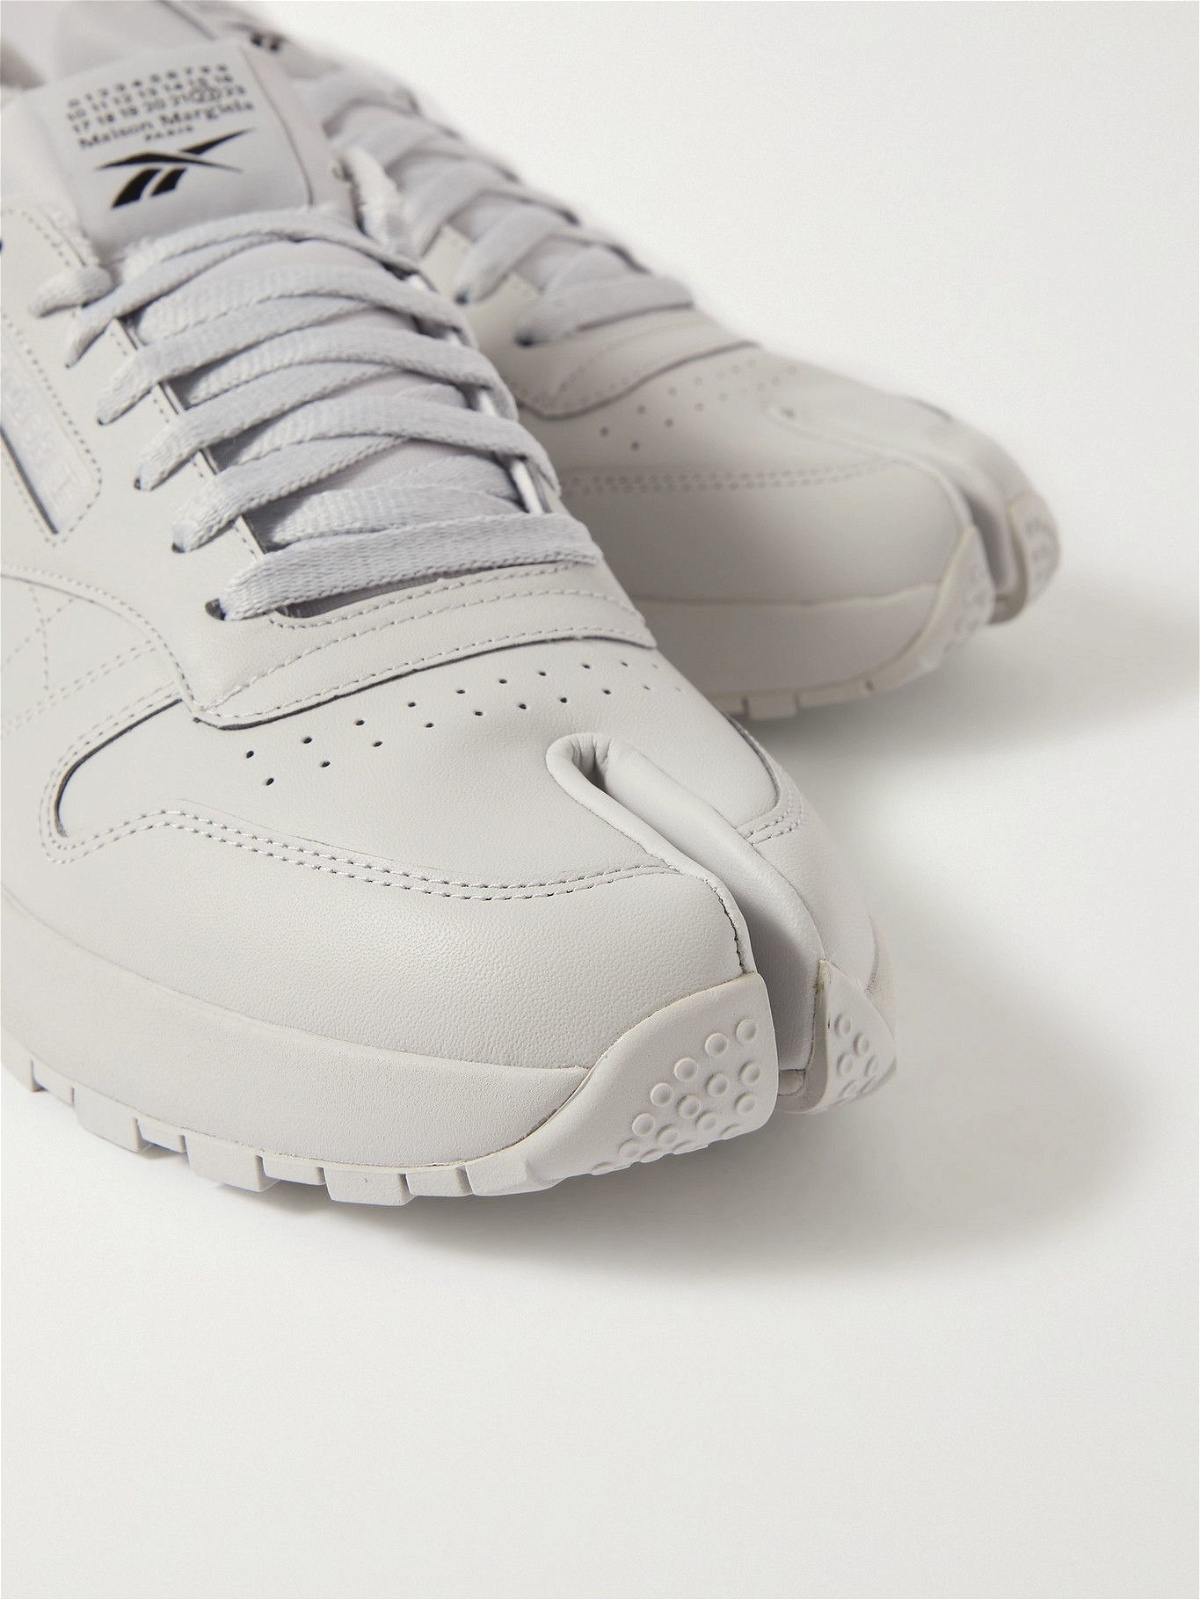 Jog Nin Tabi Black with Red Trim Split Toe Sneakers Size 17 Japan 10.5 US  EUC | eBay